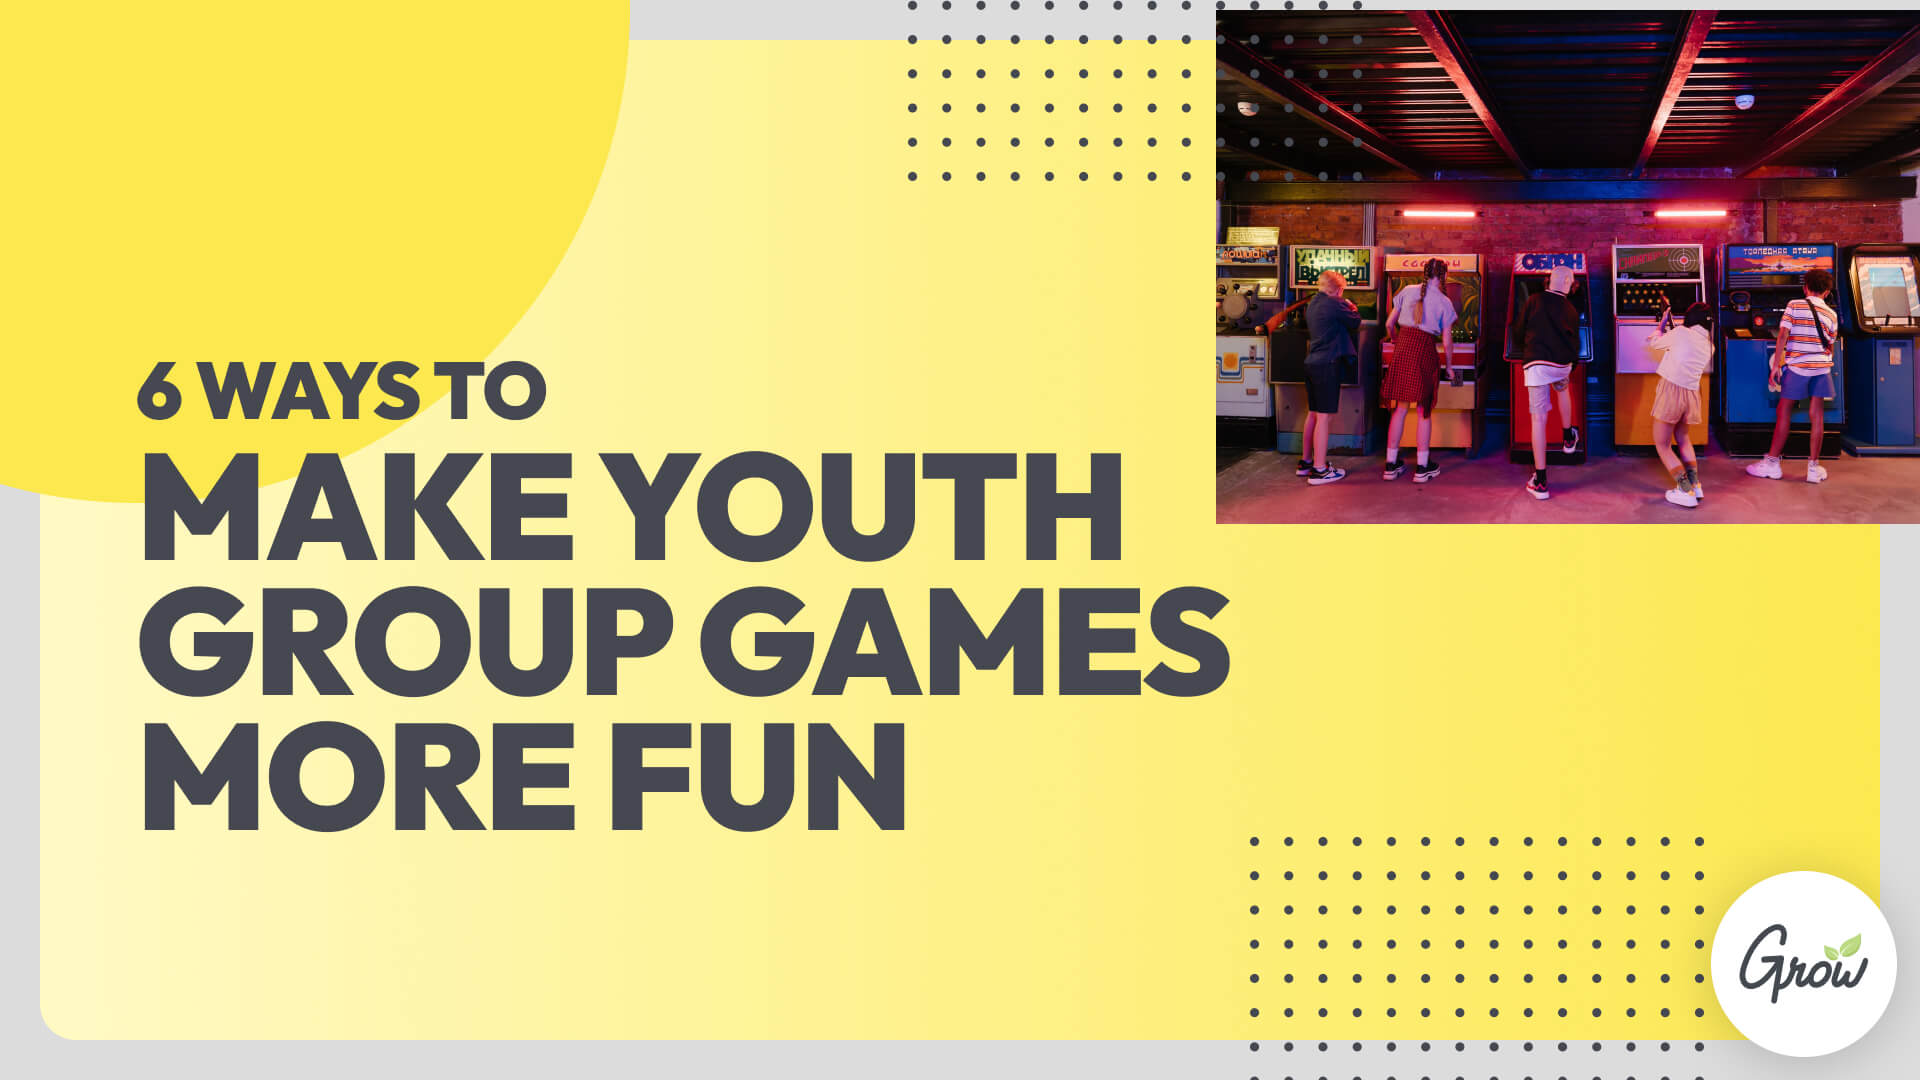 6 Ways to Make Youth Group Games More Fun